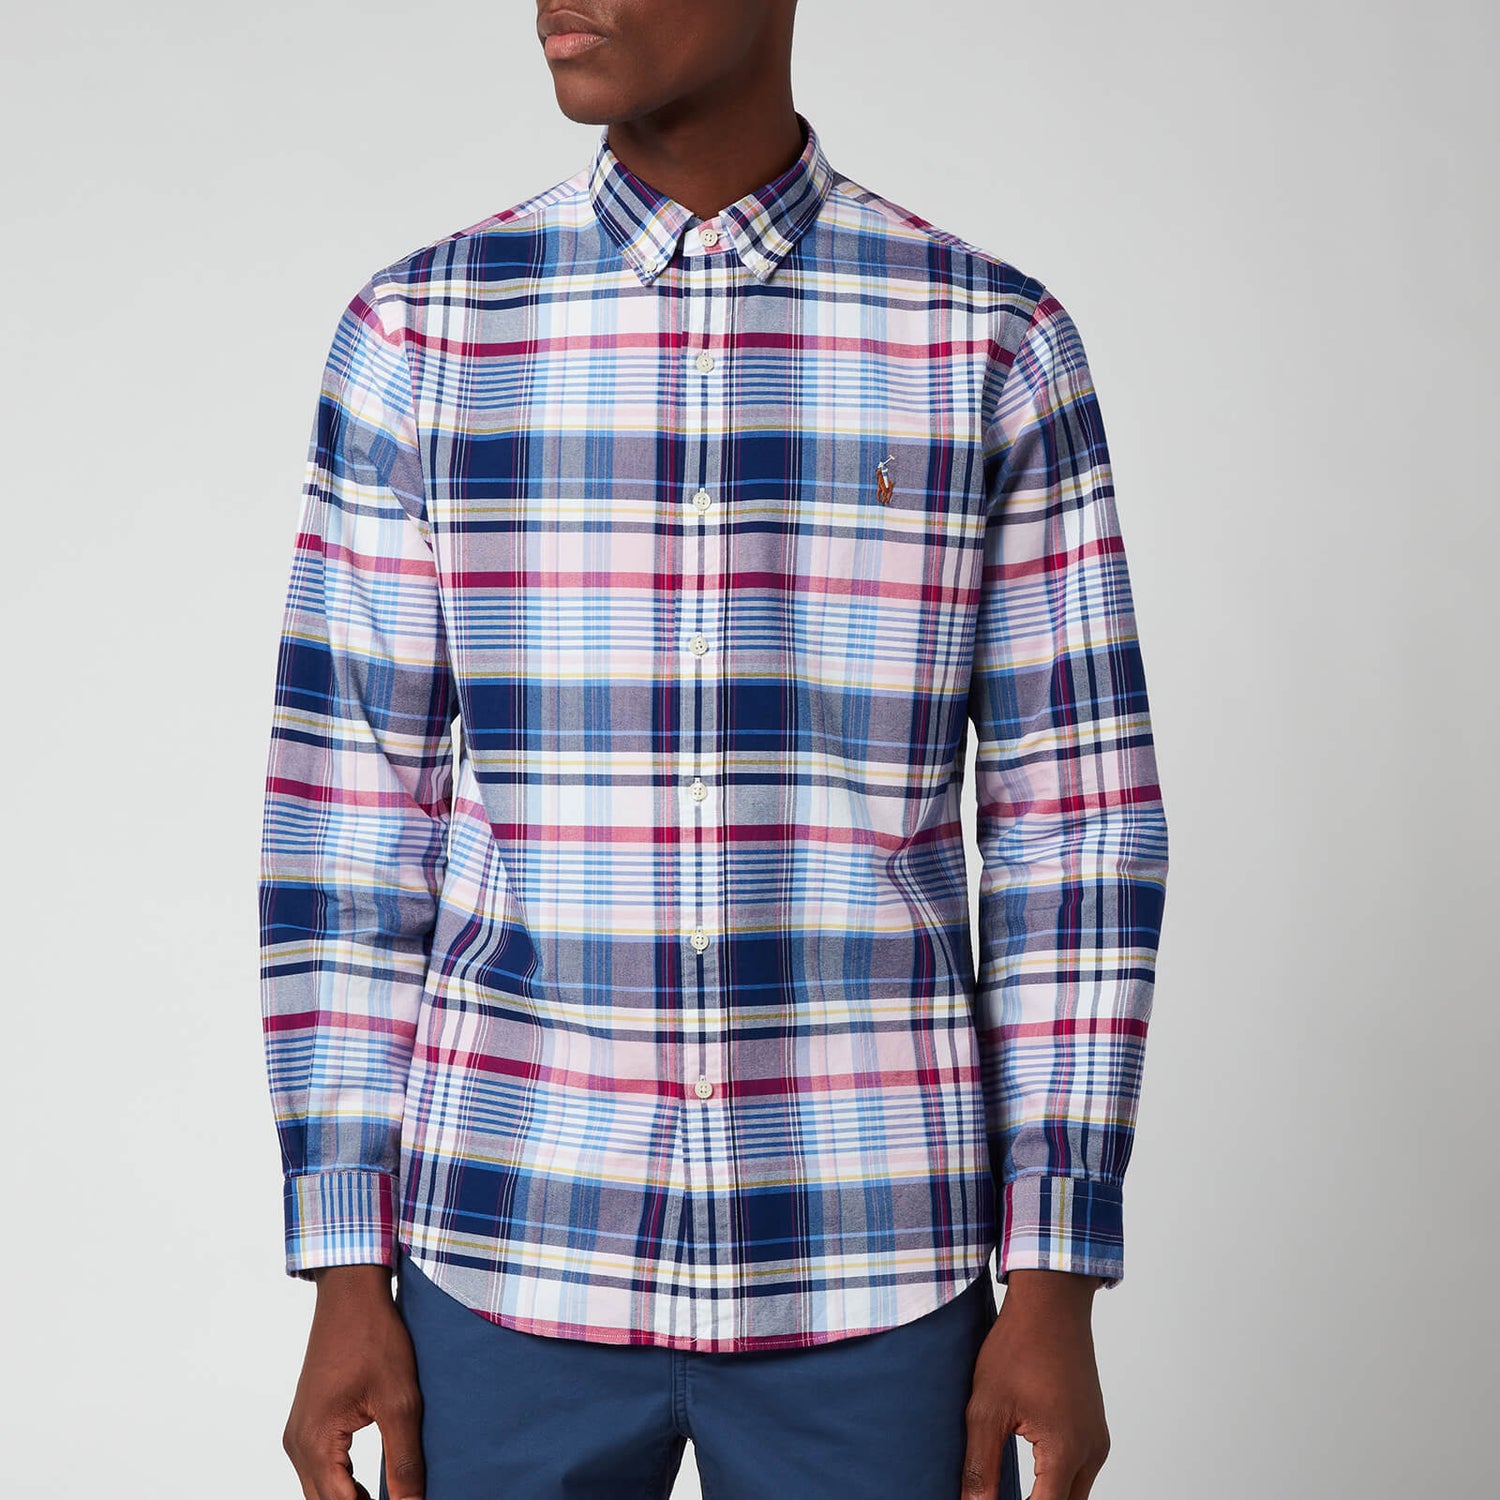 Polo Ralph Lauren Men's Slim Fit Yard Dyed Oxford Check Shirt - Pink/Blue Multi - S